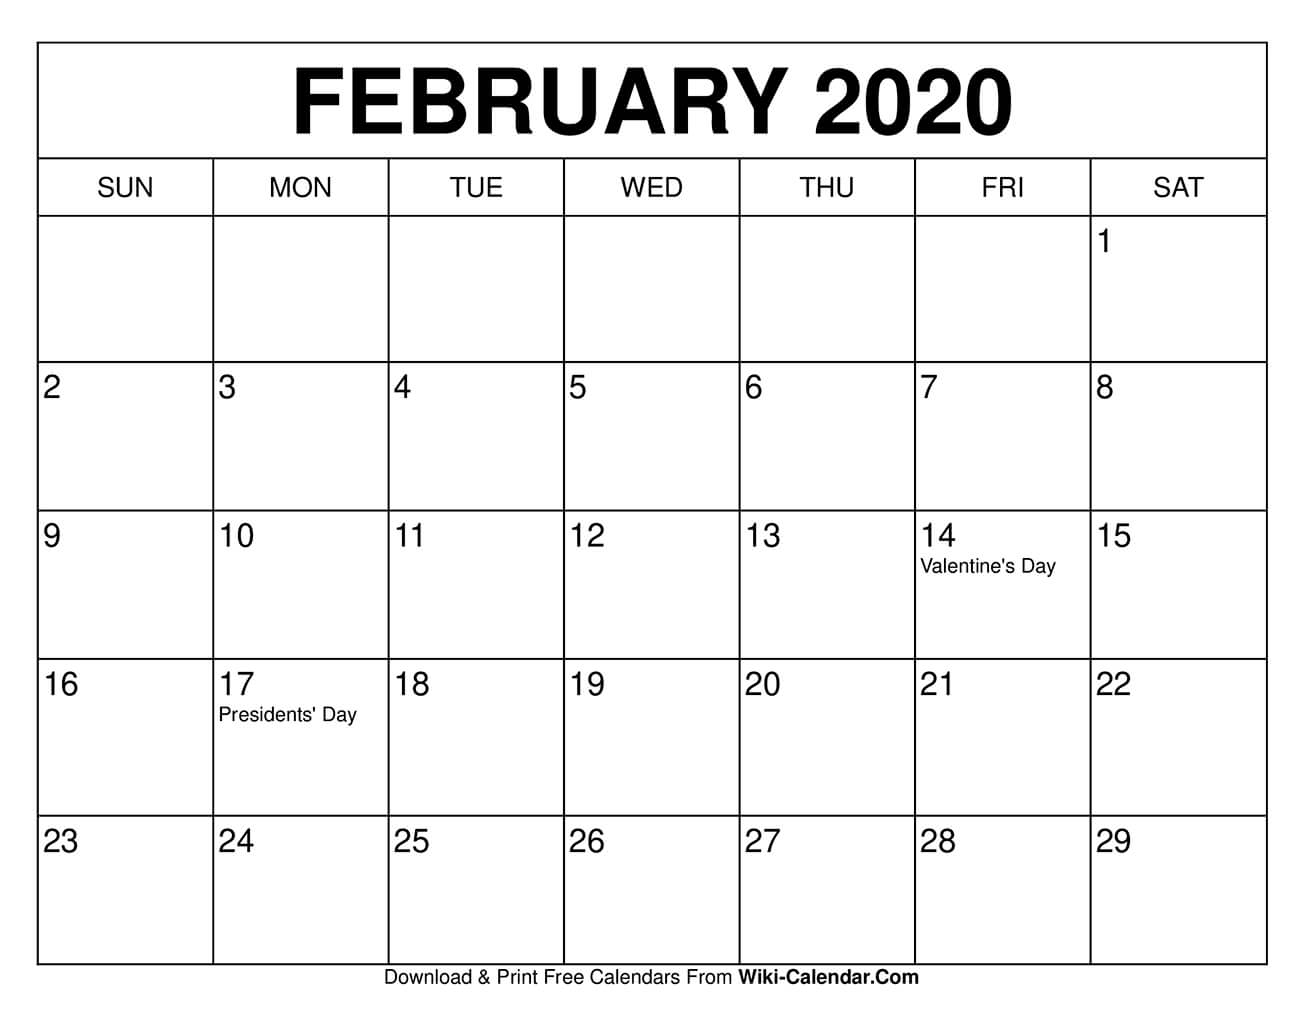 Free Printable February 2021 Calendars